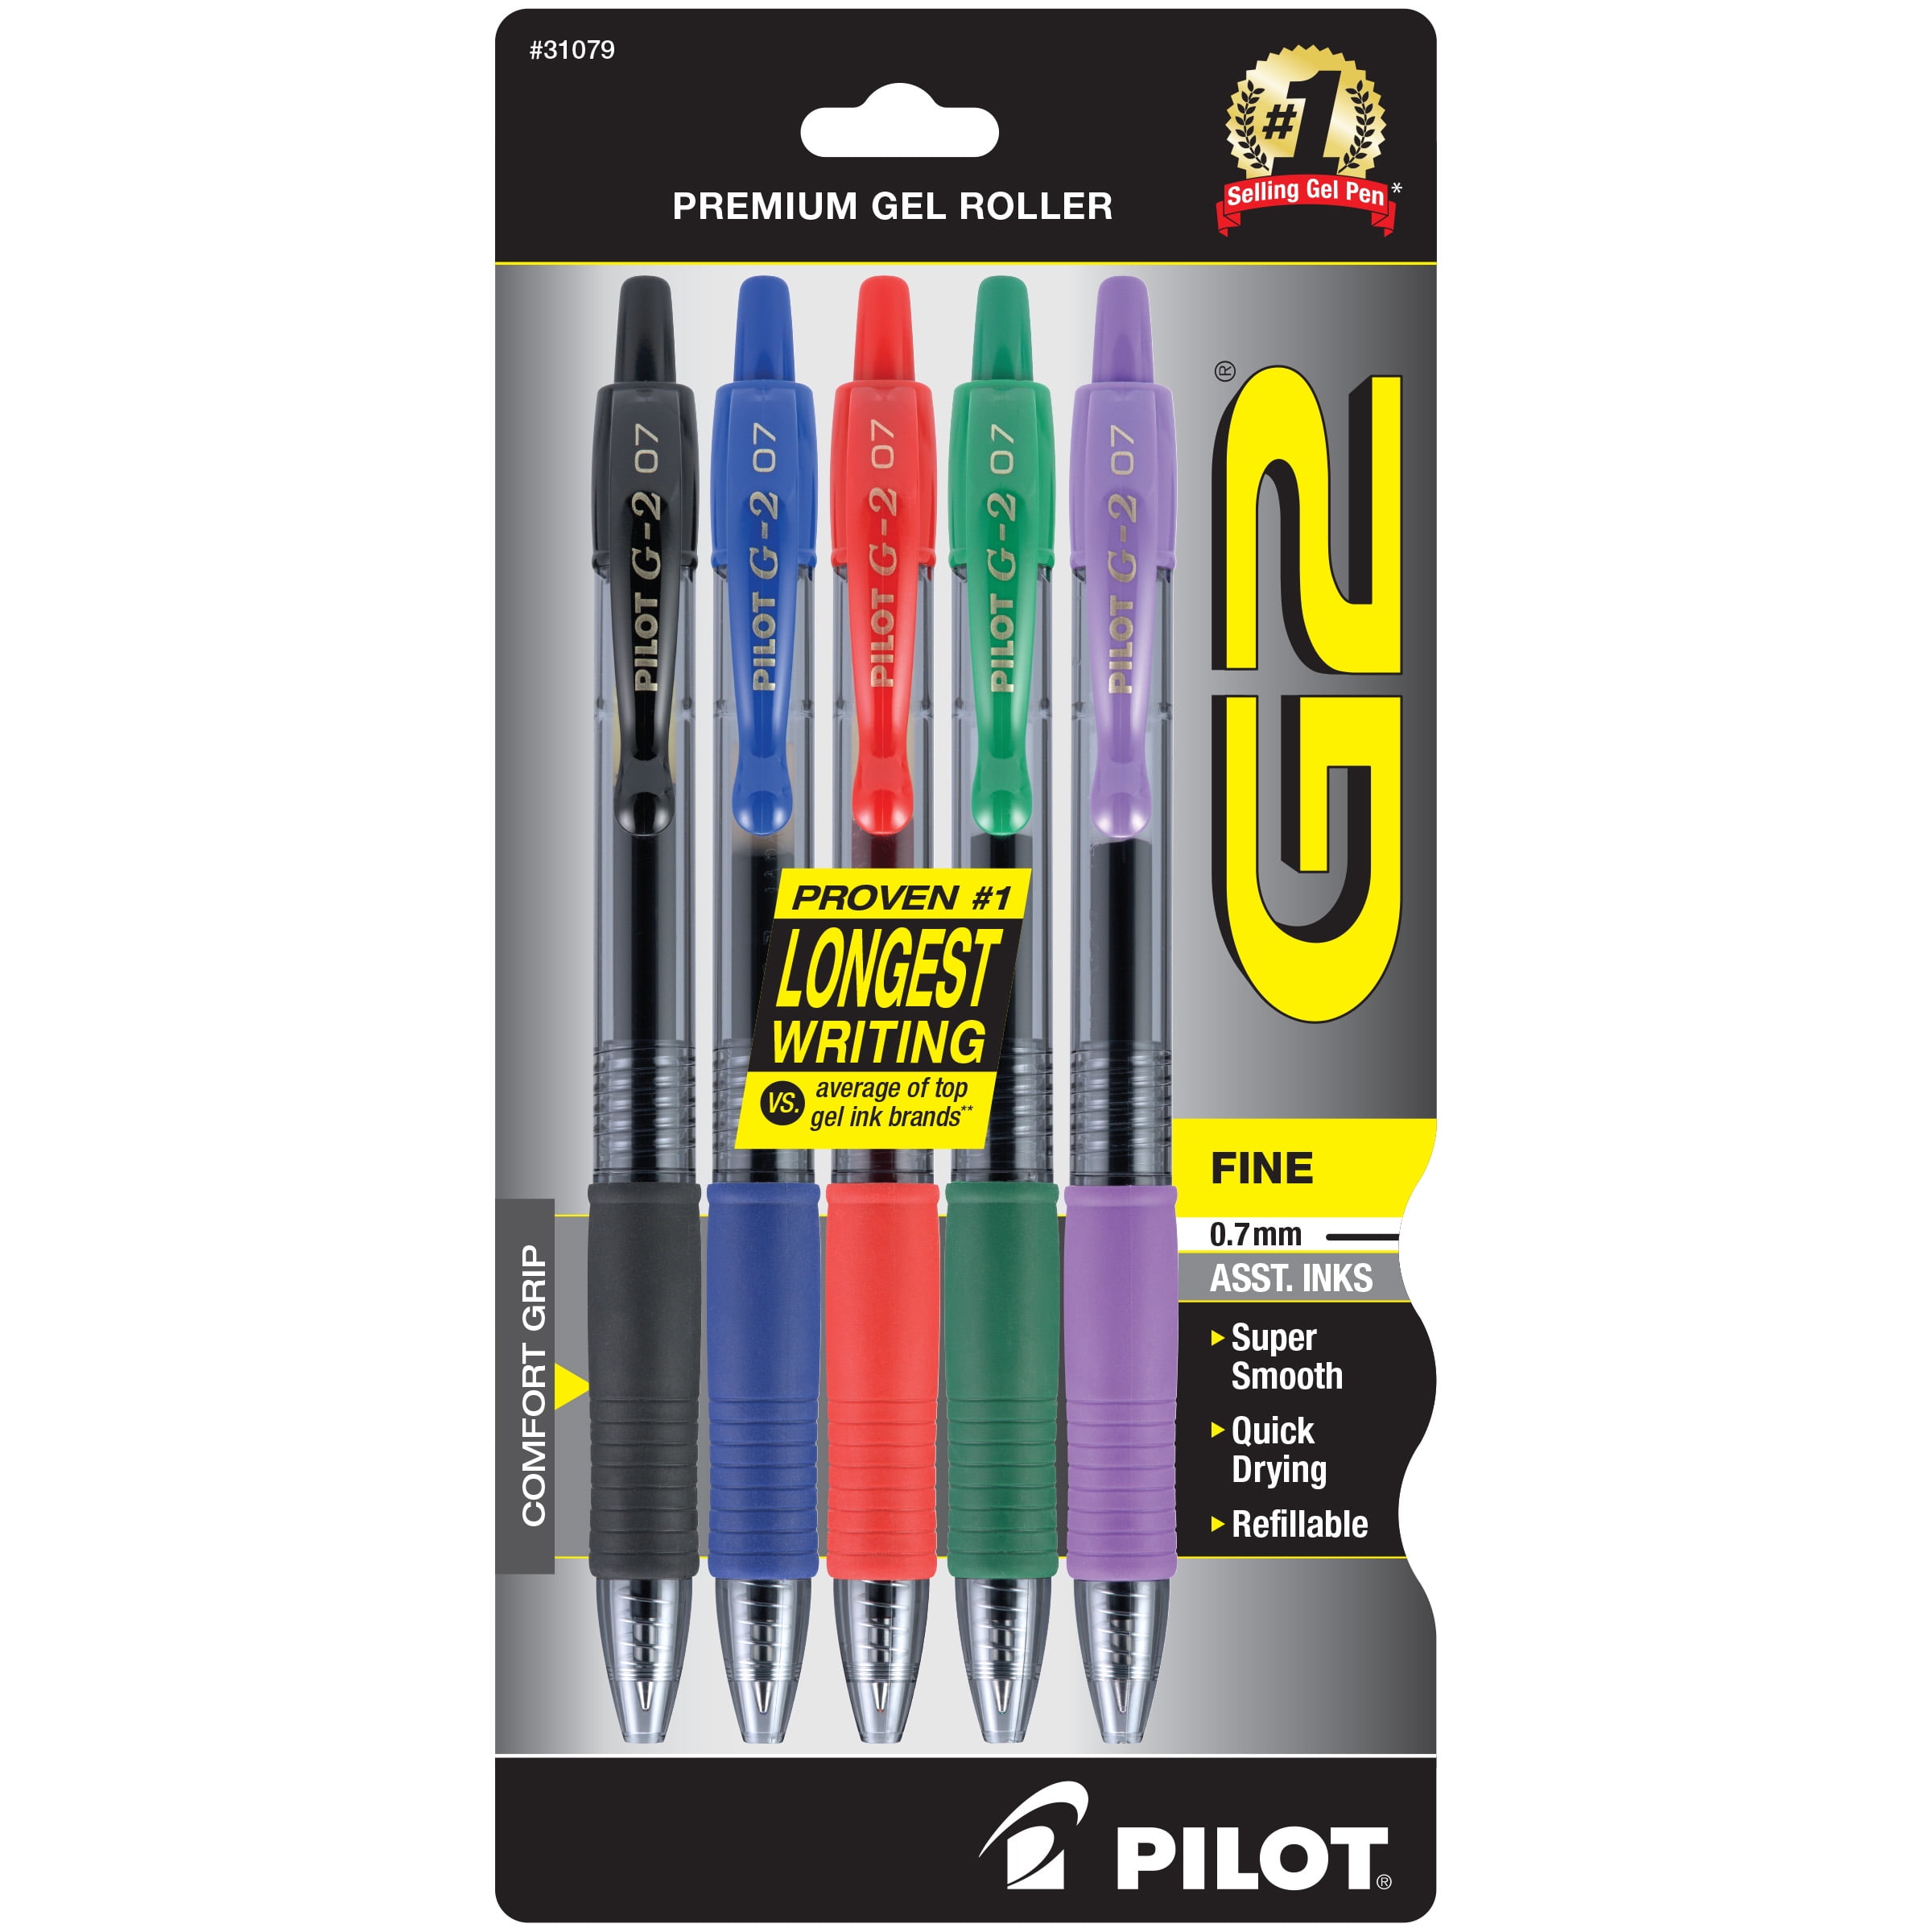 Yeah, I mean I guess I kind of like Pilot G2 pens : r/pens